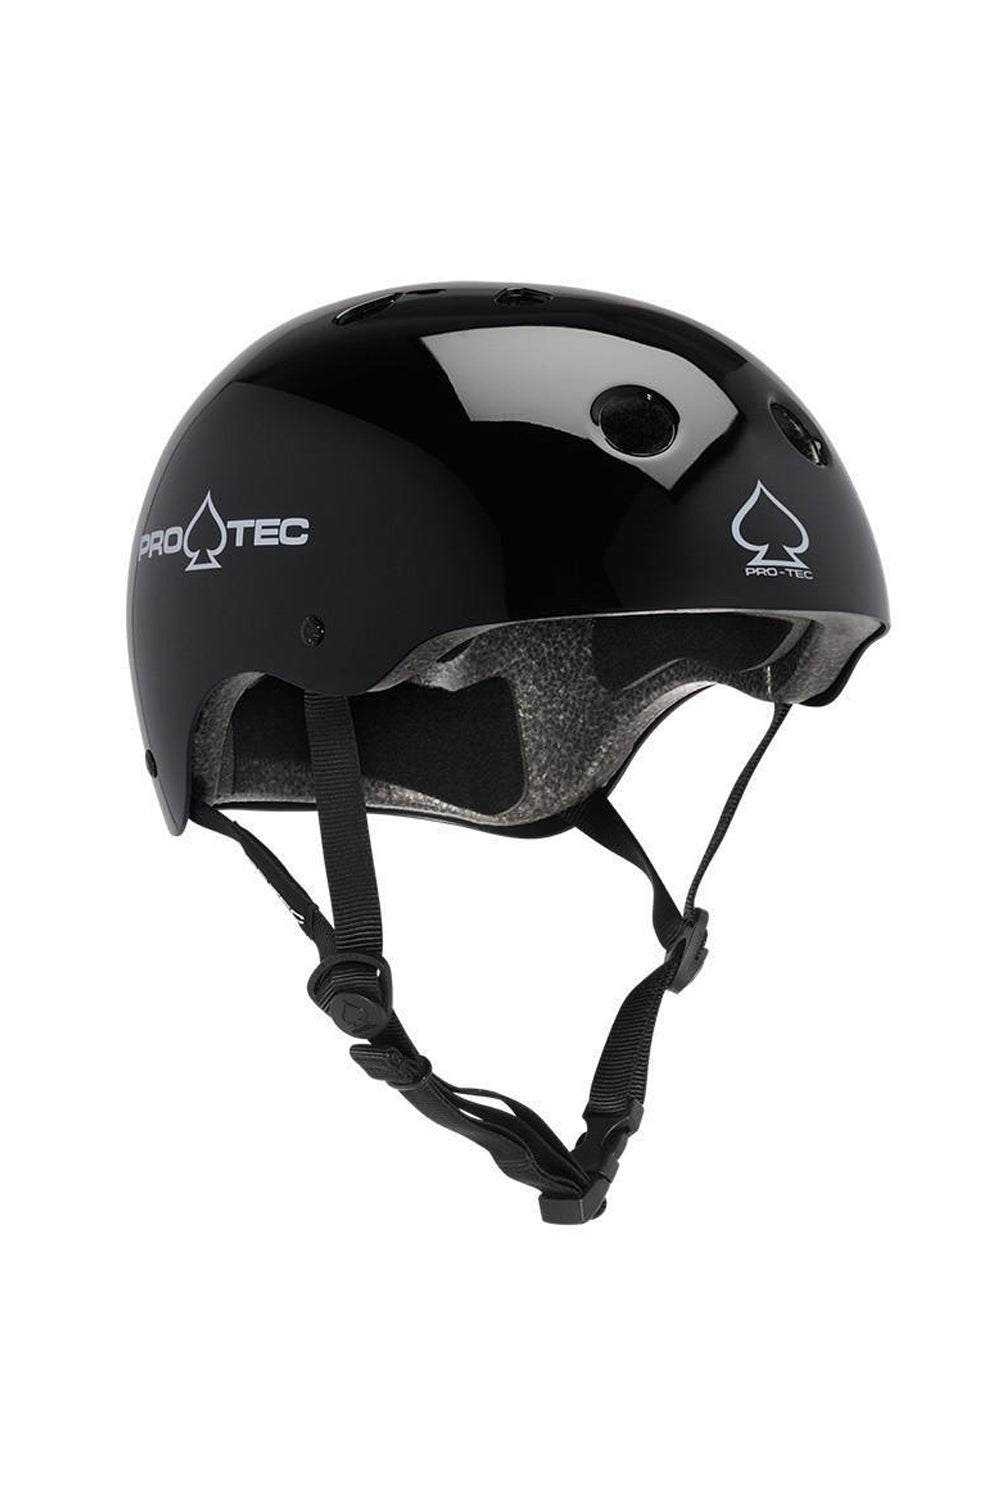 Pro Tec Classic (Certified) Skate Helmet Protec